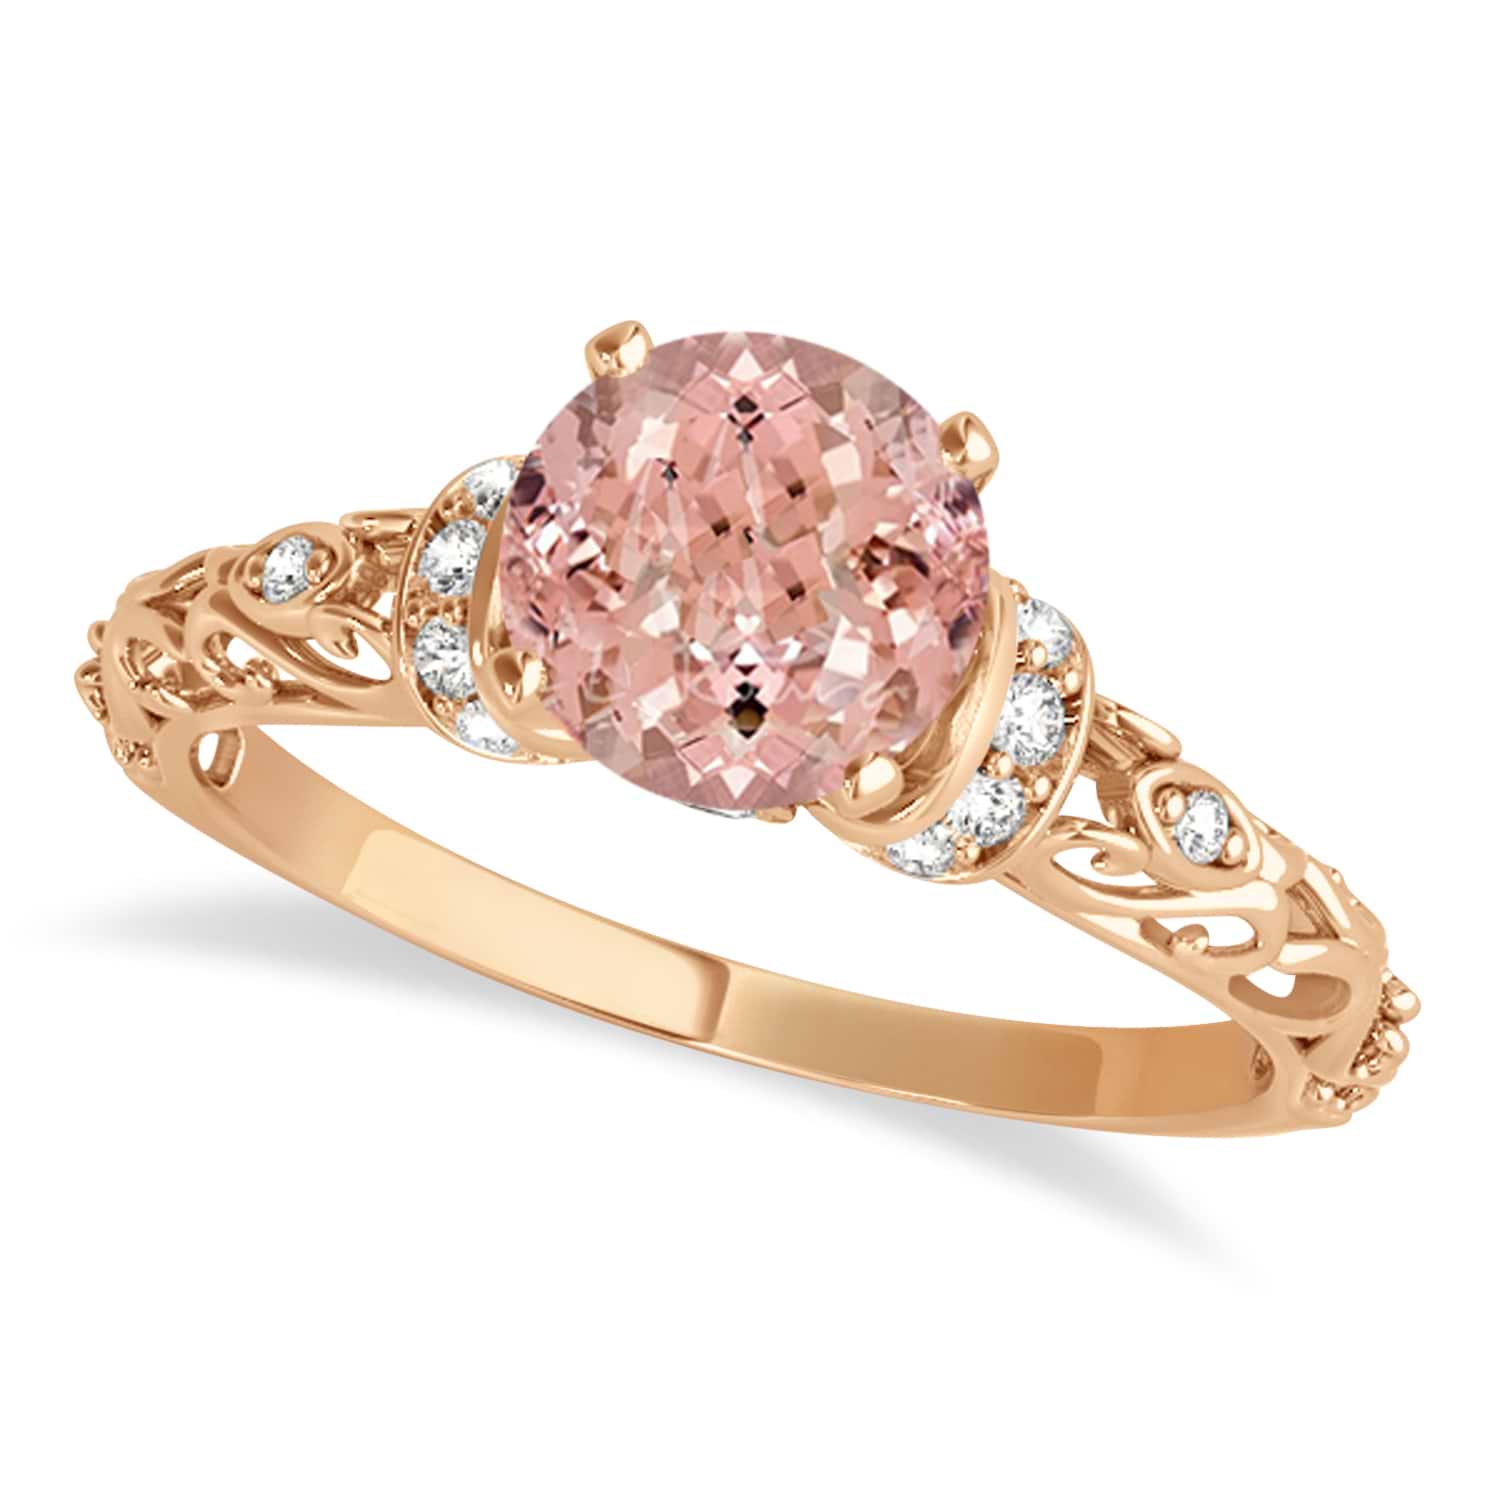 Morganite & Diamond Antique Style Engagement Ring 14k Rose Gold (1.62ct)